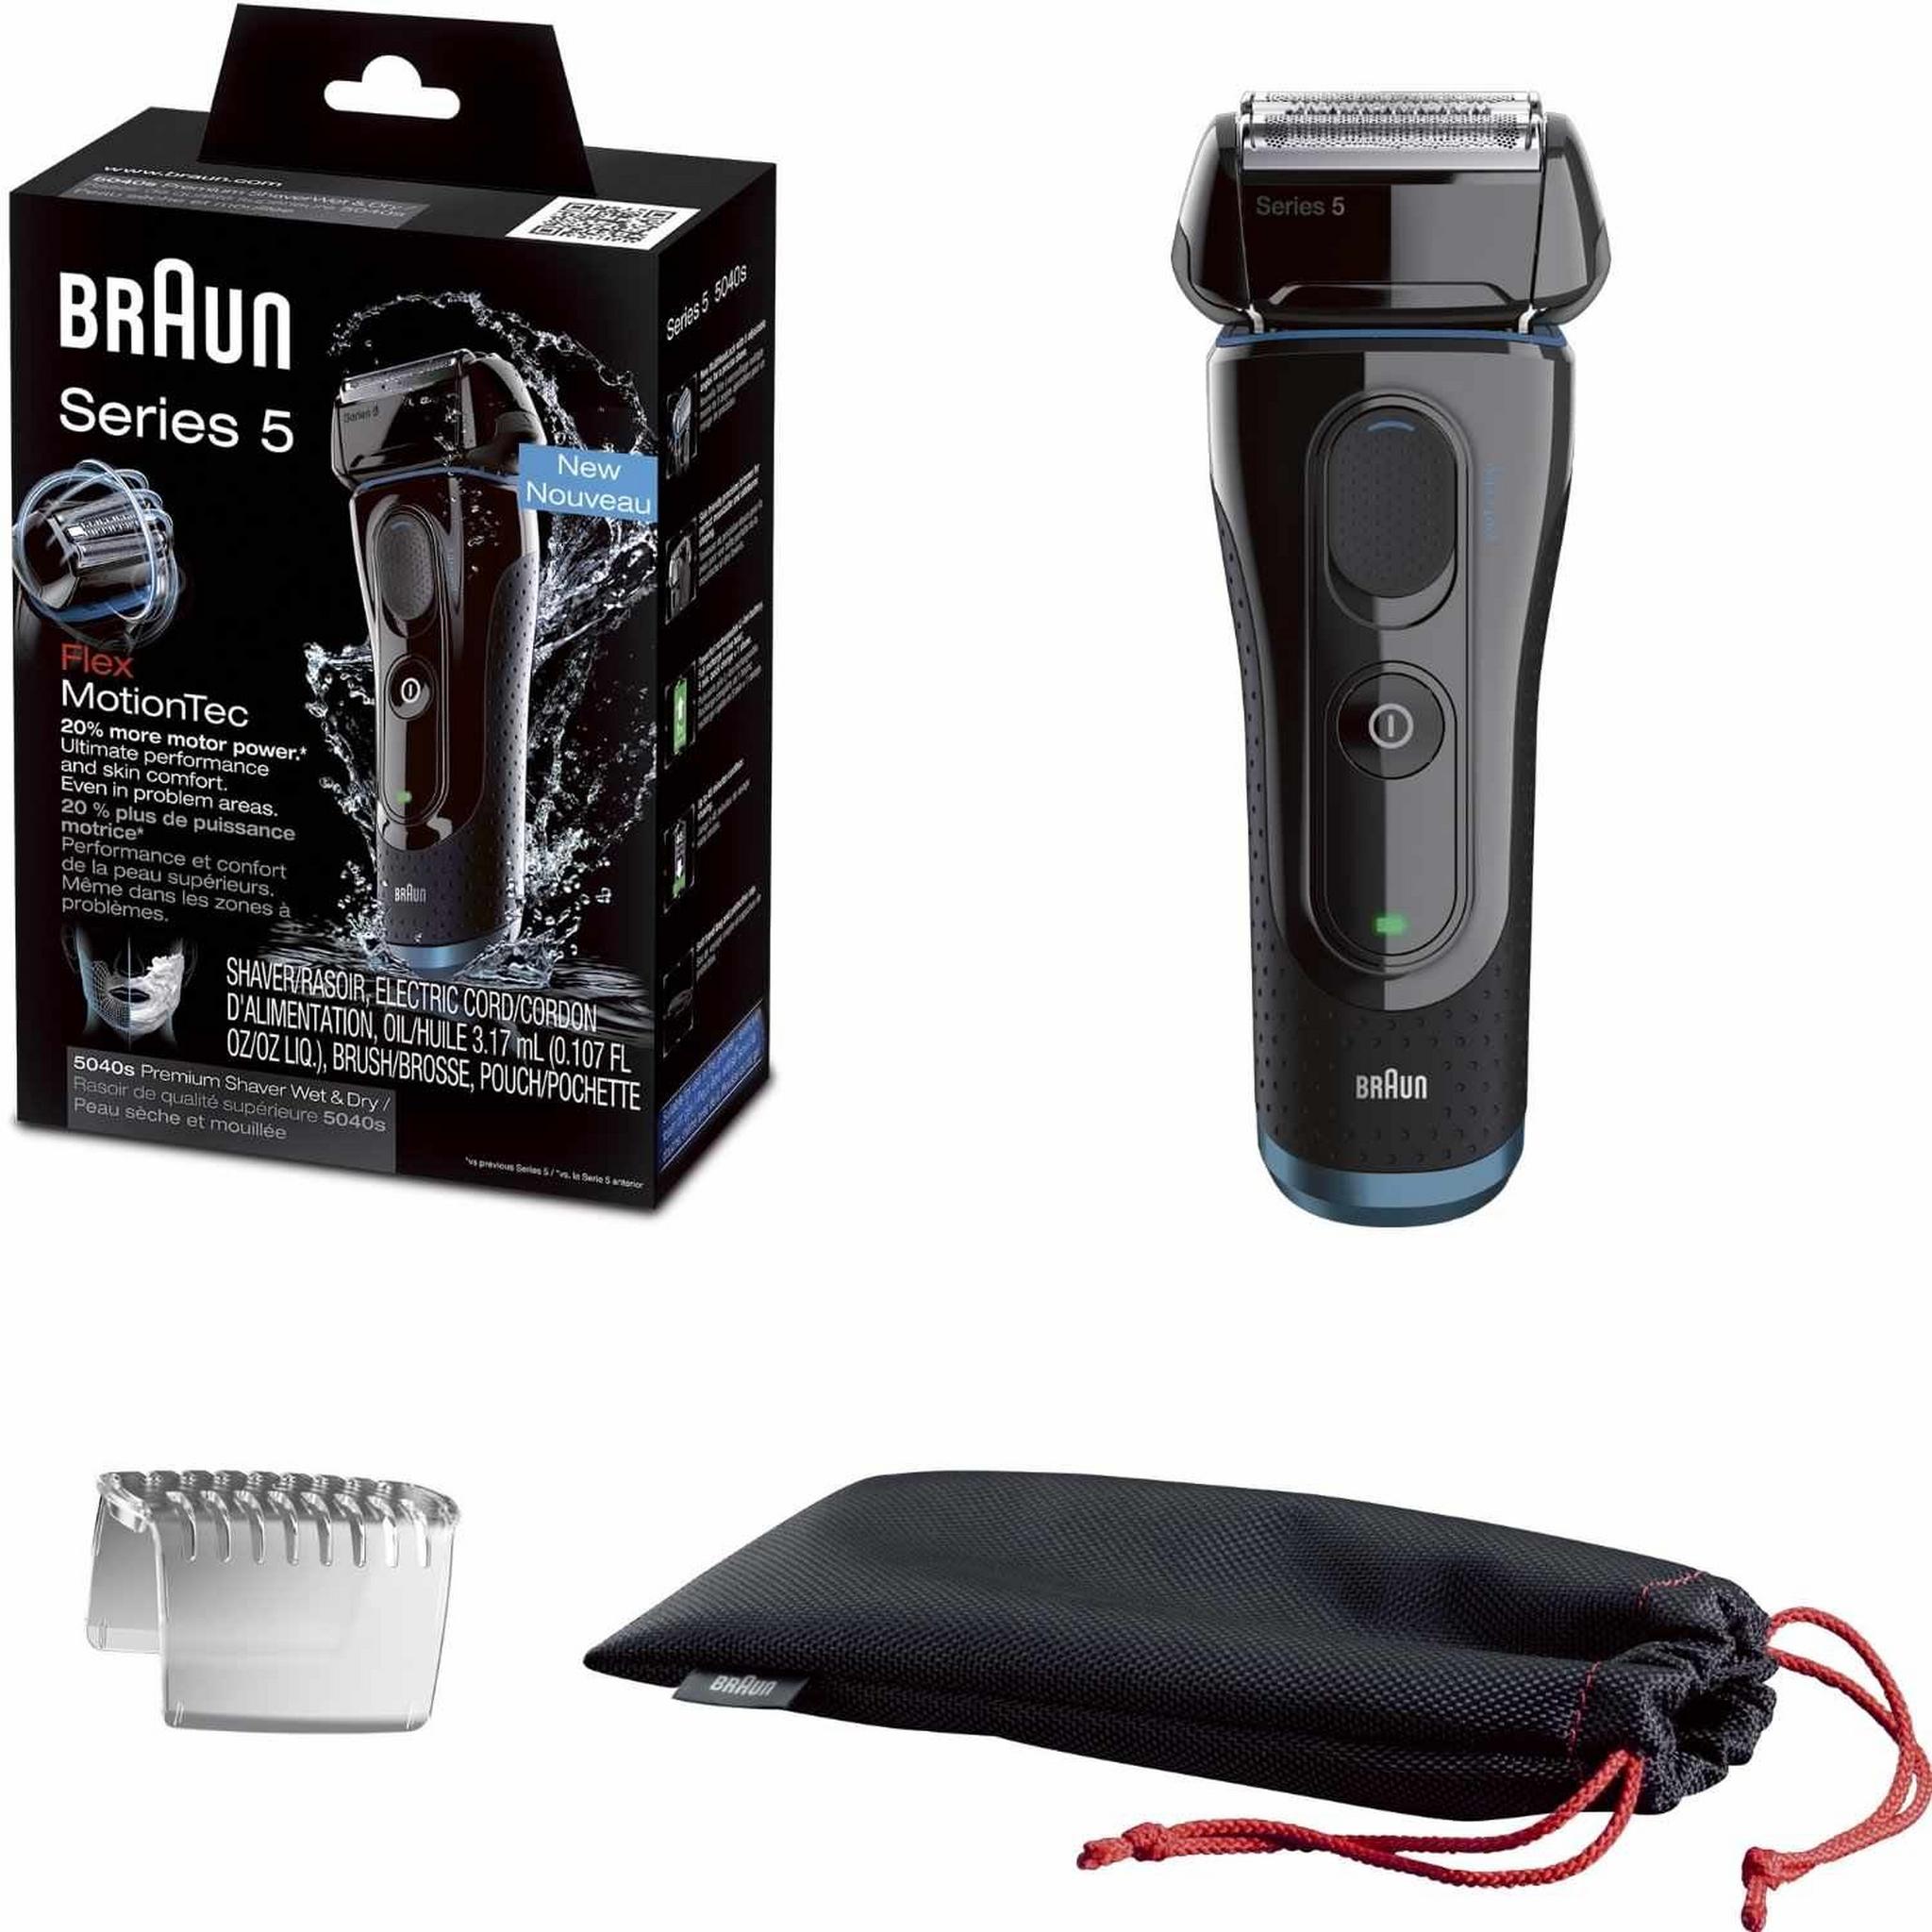 Braun 5040 Series 5 Shaver